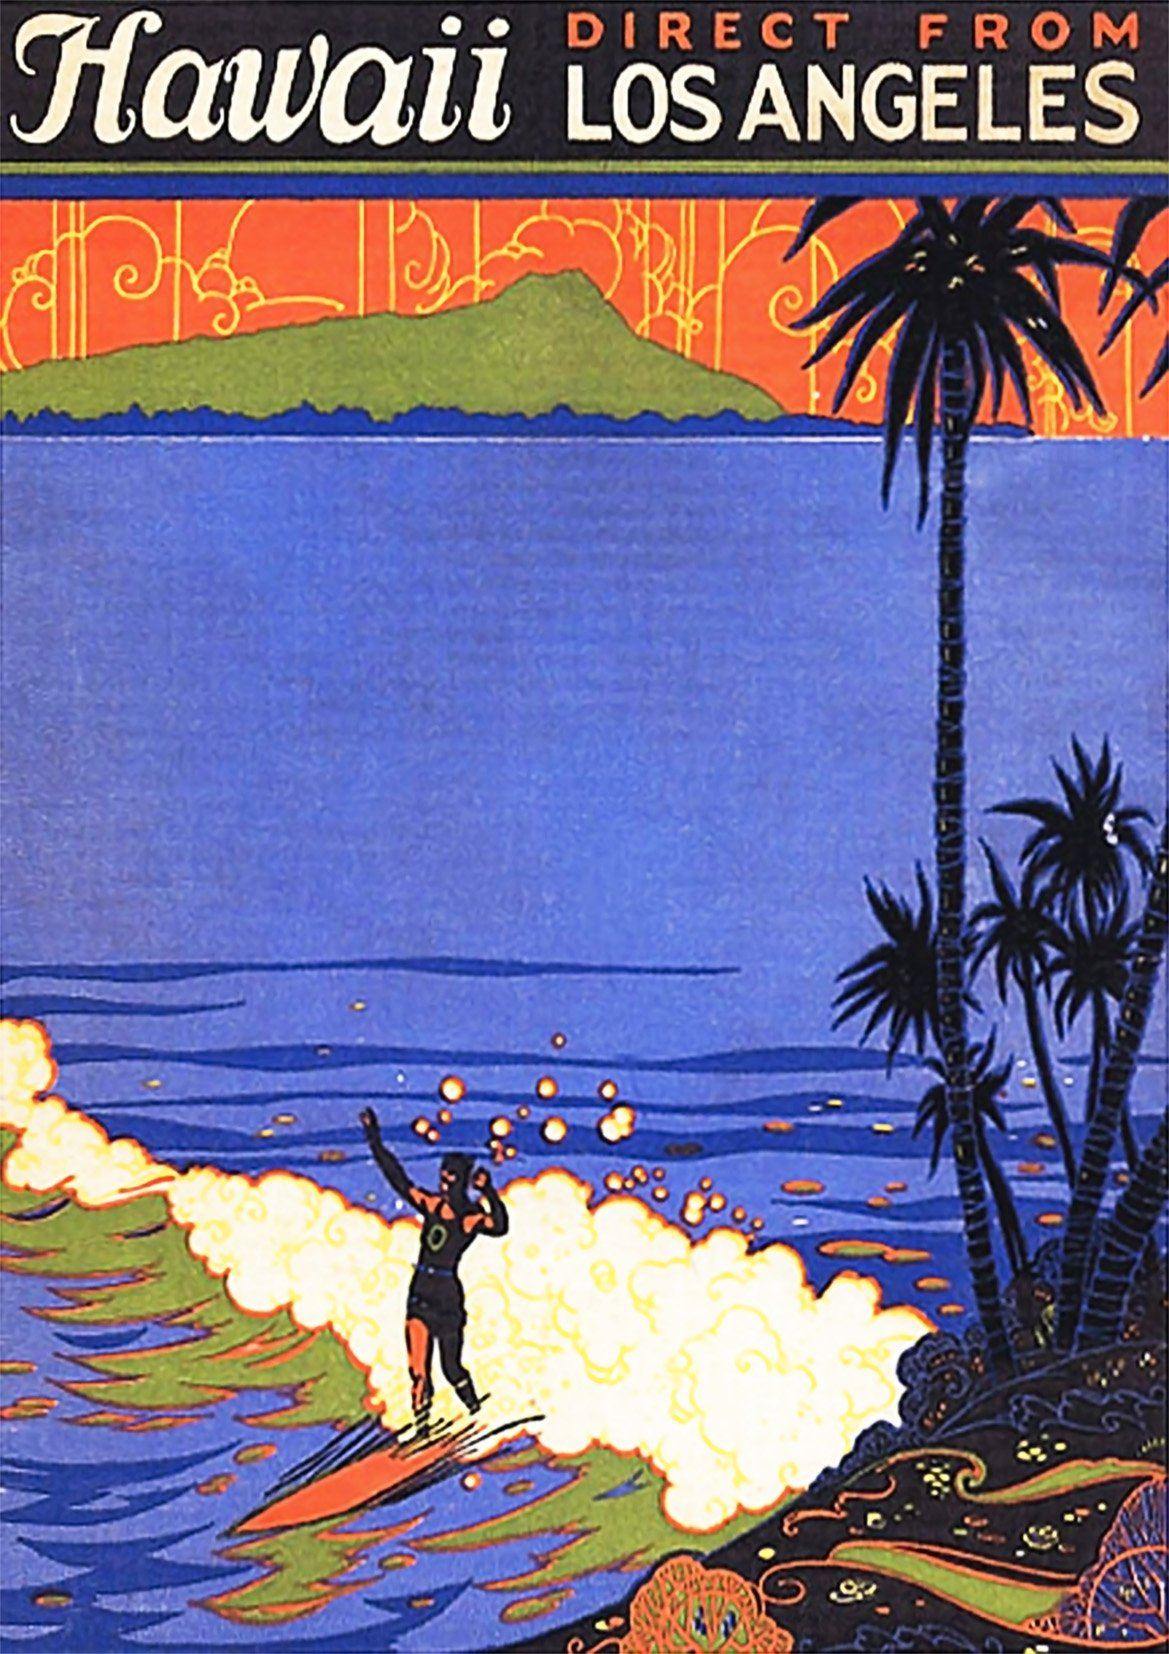 HAWAII SURFING POSTER: Vintage Blue Sea Travel Advert - Pimlico Prints